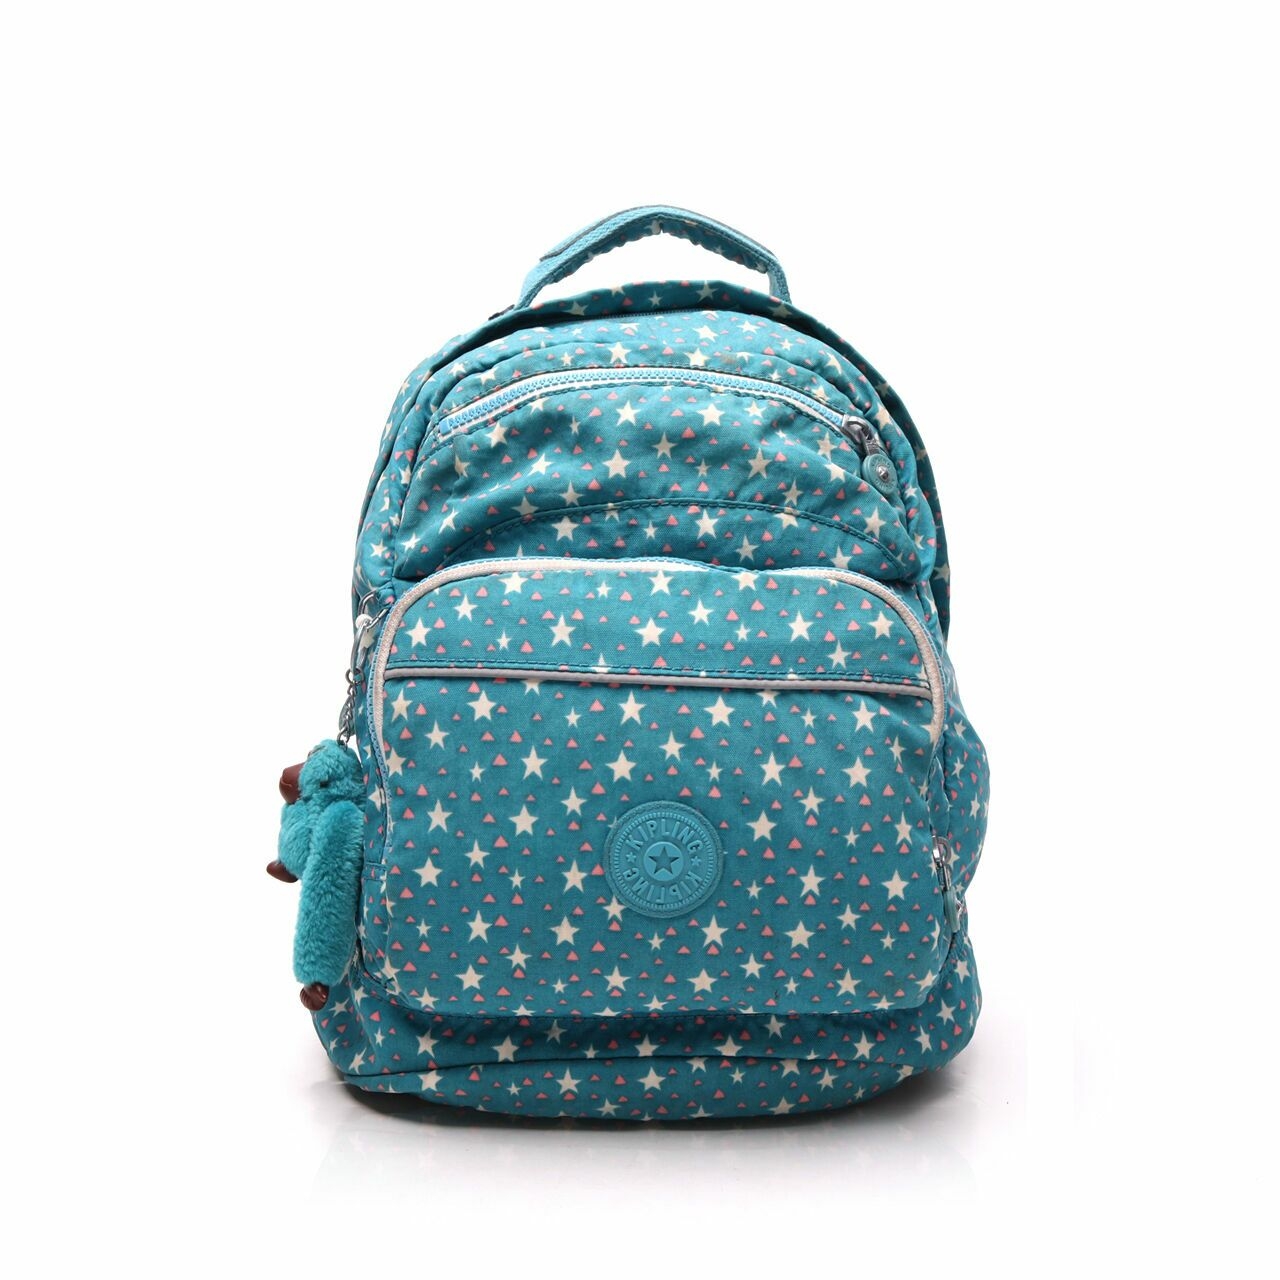 Kipling Green Backpack